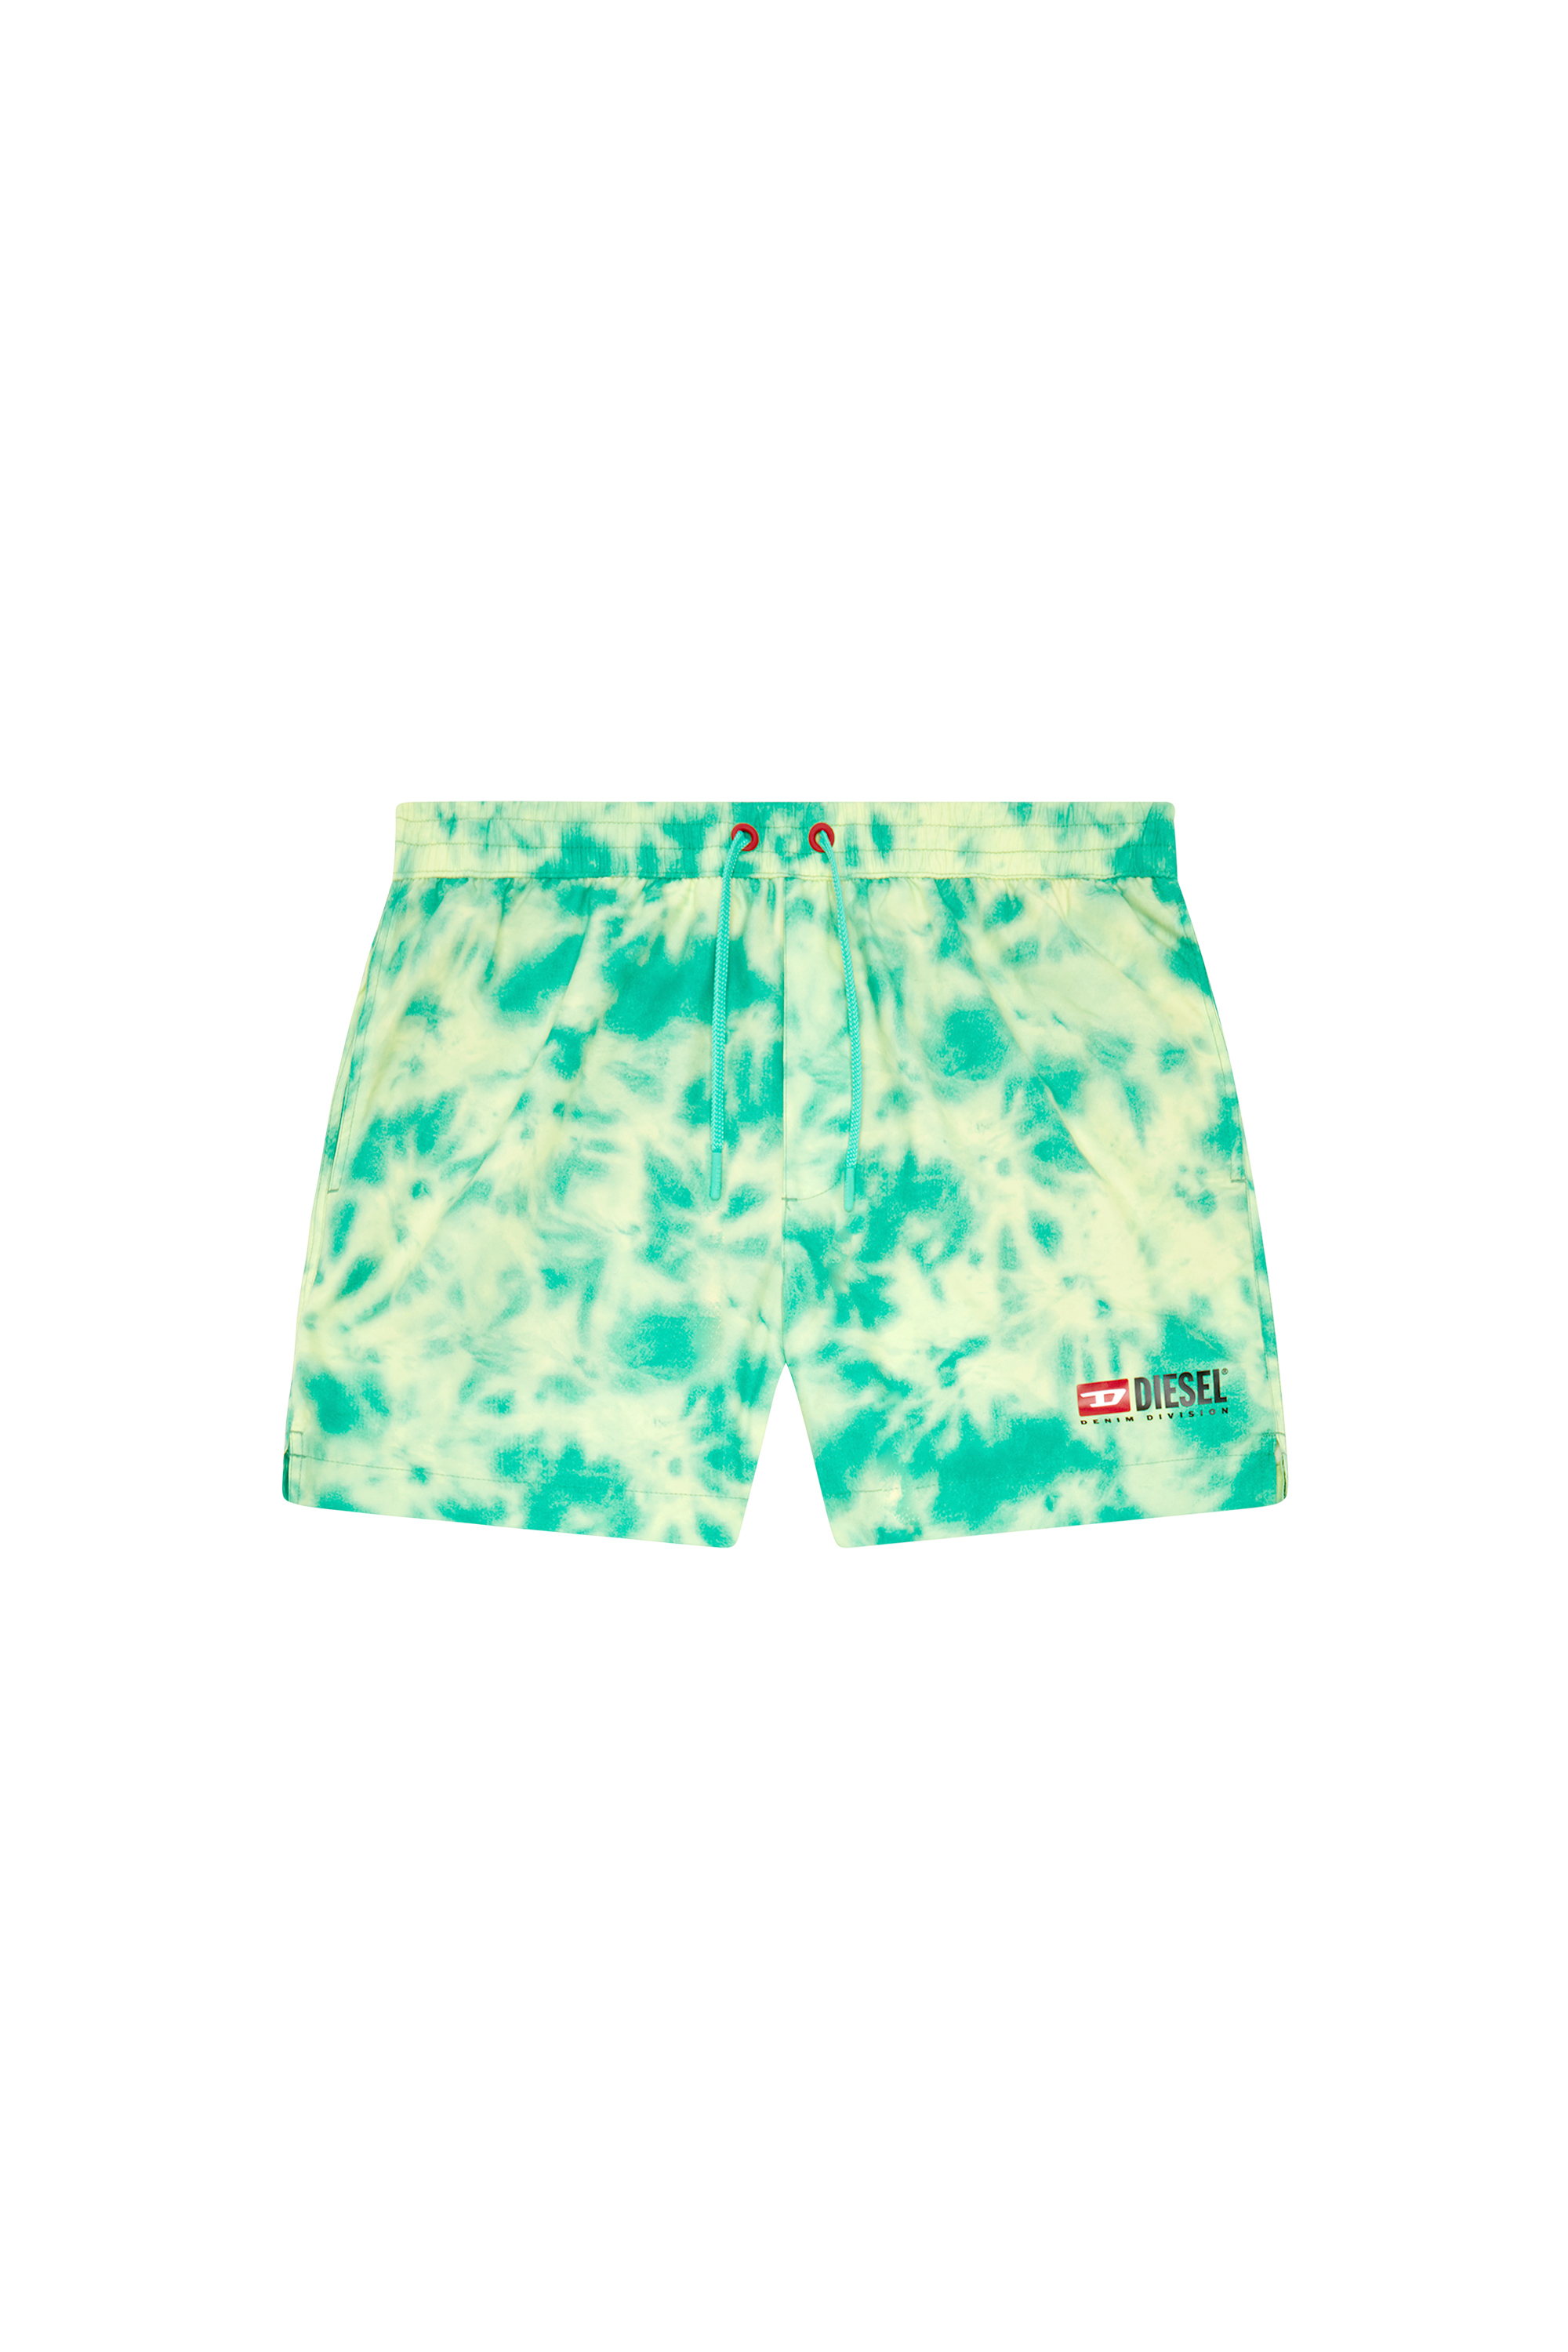 Diesel - BMBX-KEN-37, Male Mid-length swim shorts with tie-dye print in Multicolor - Image 5